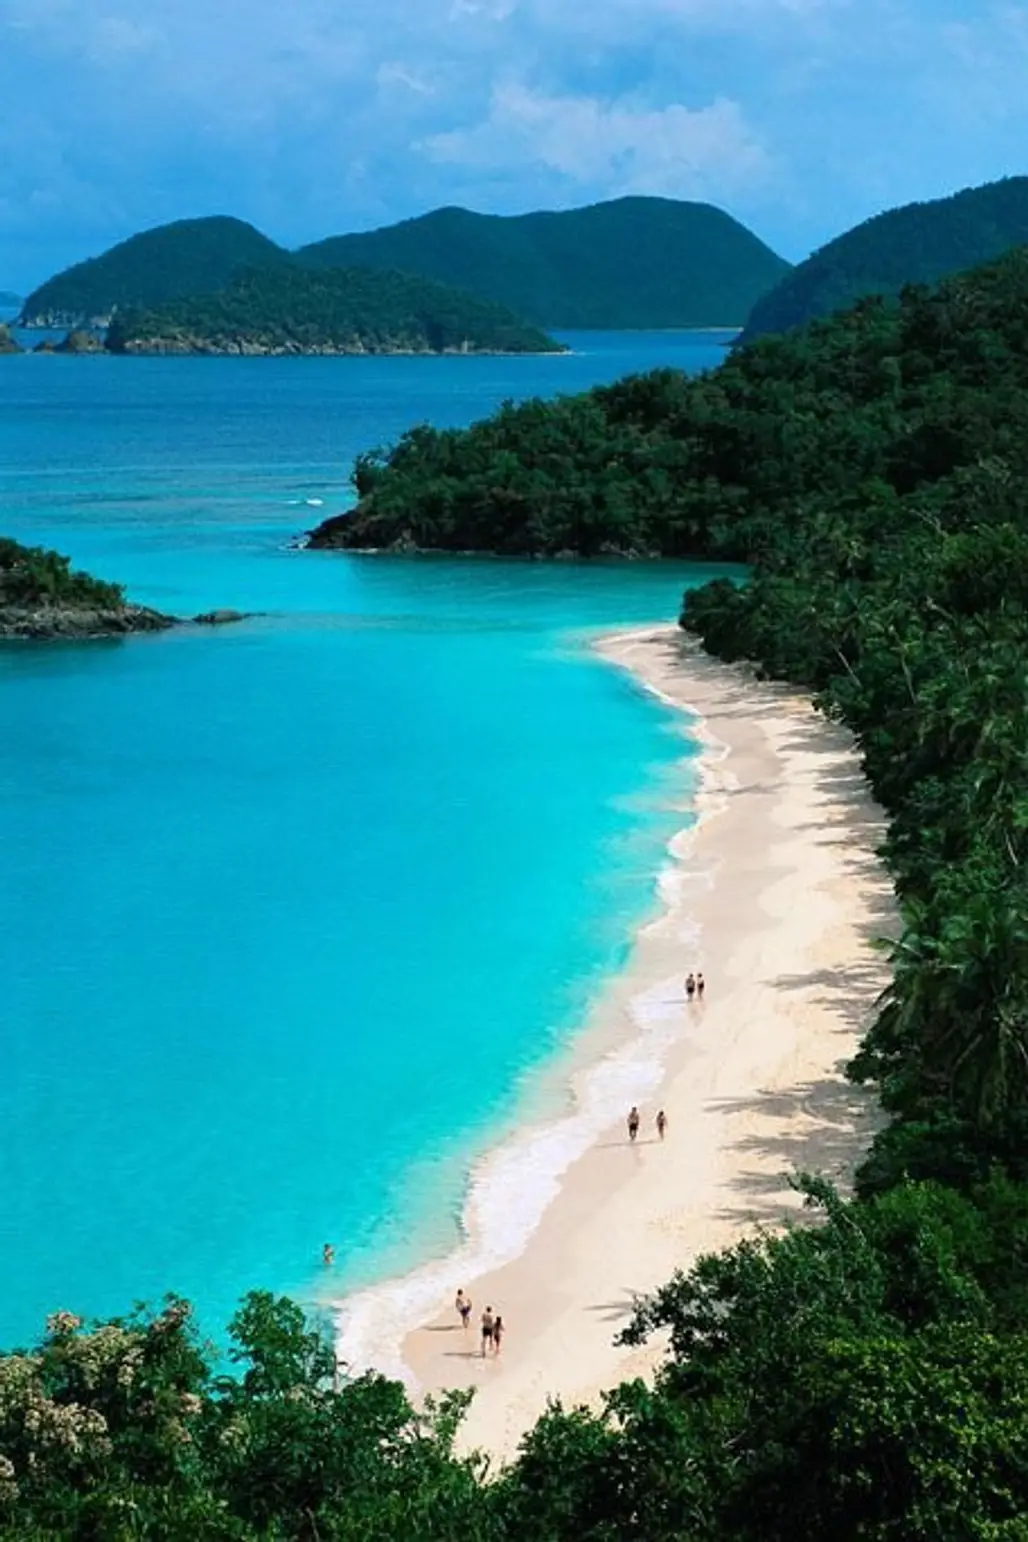 St. John, US Virgin Islands